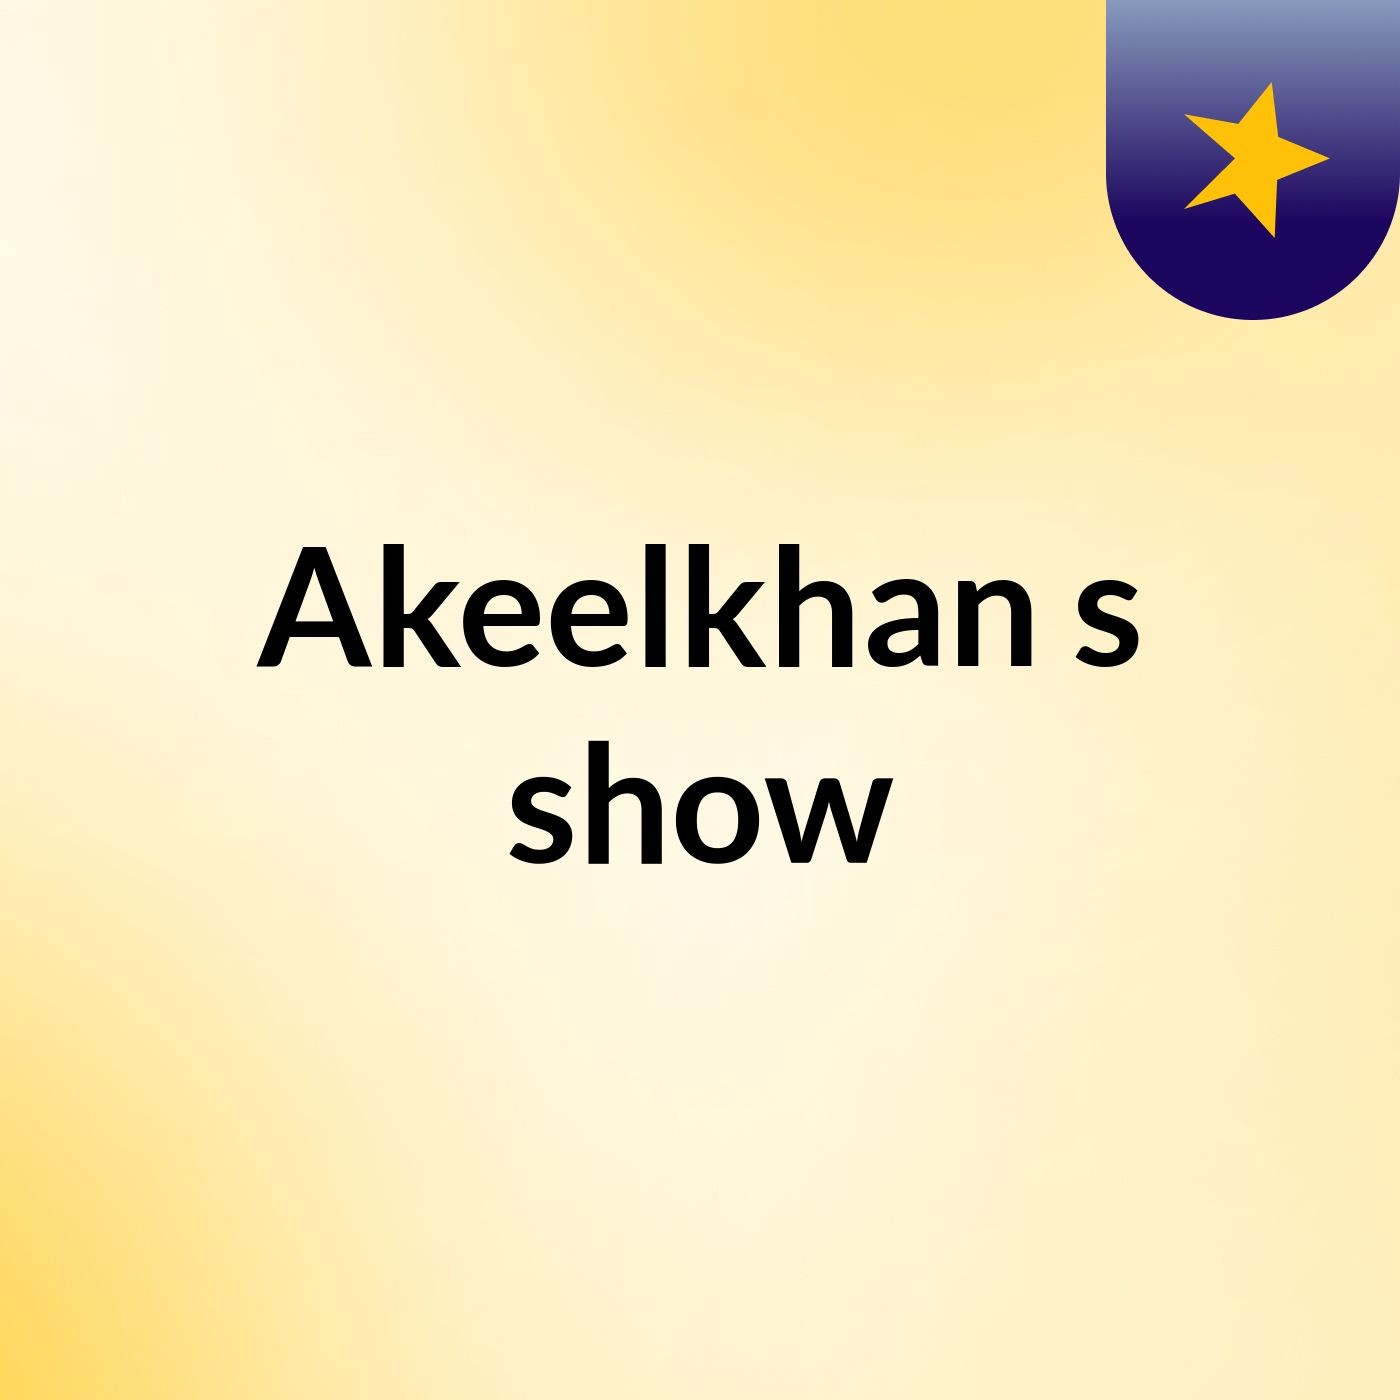 Akeelkhan's show